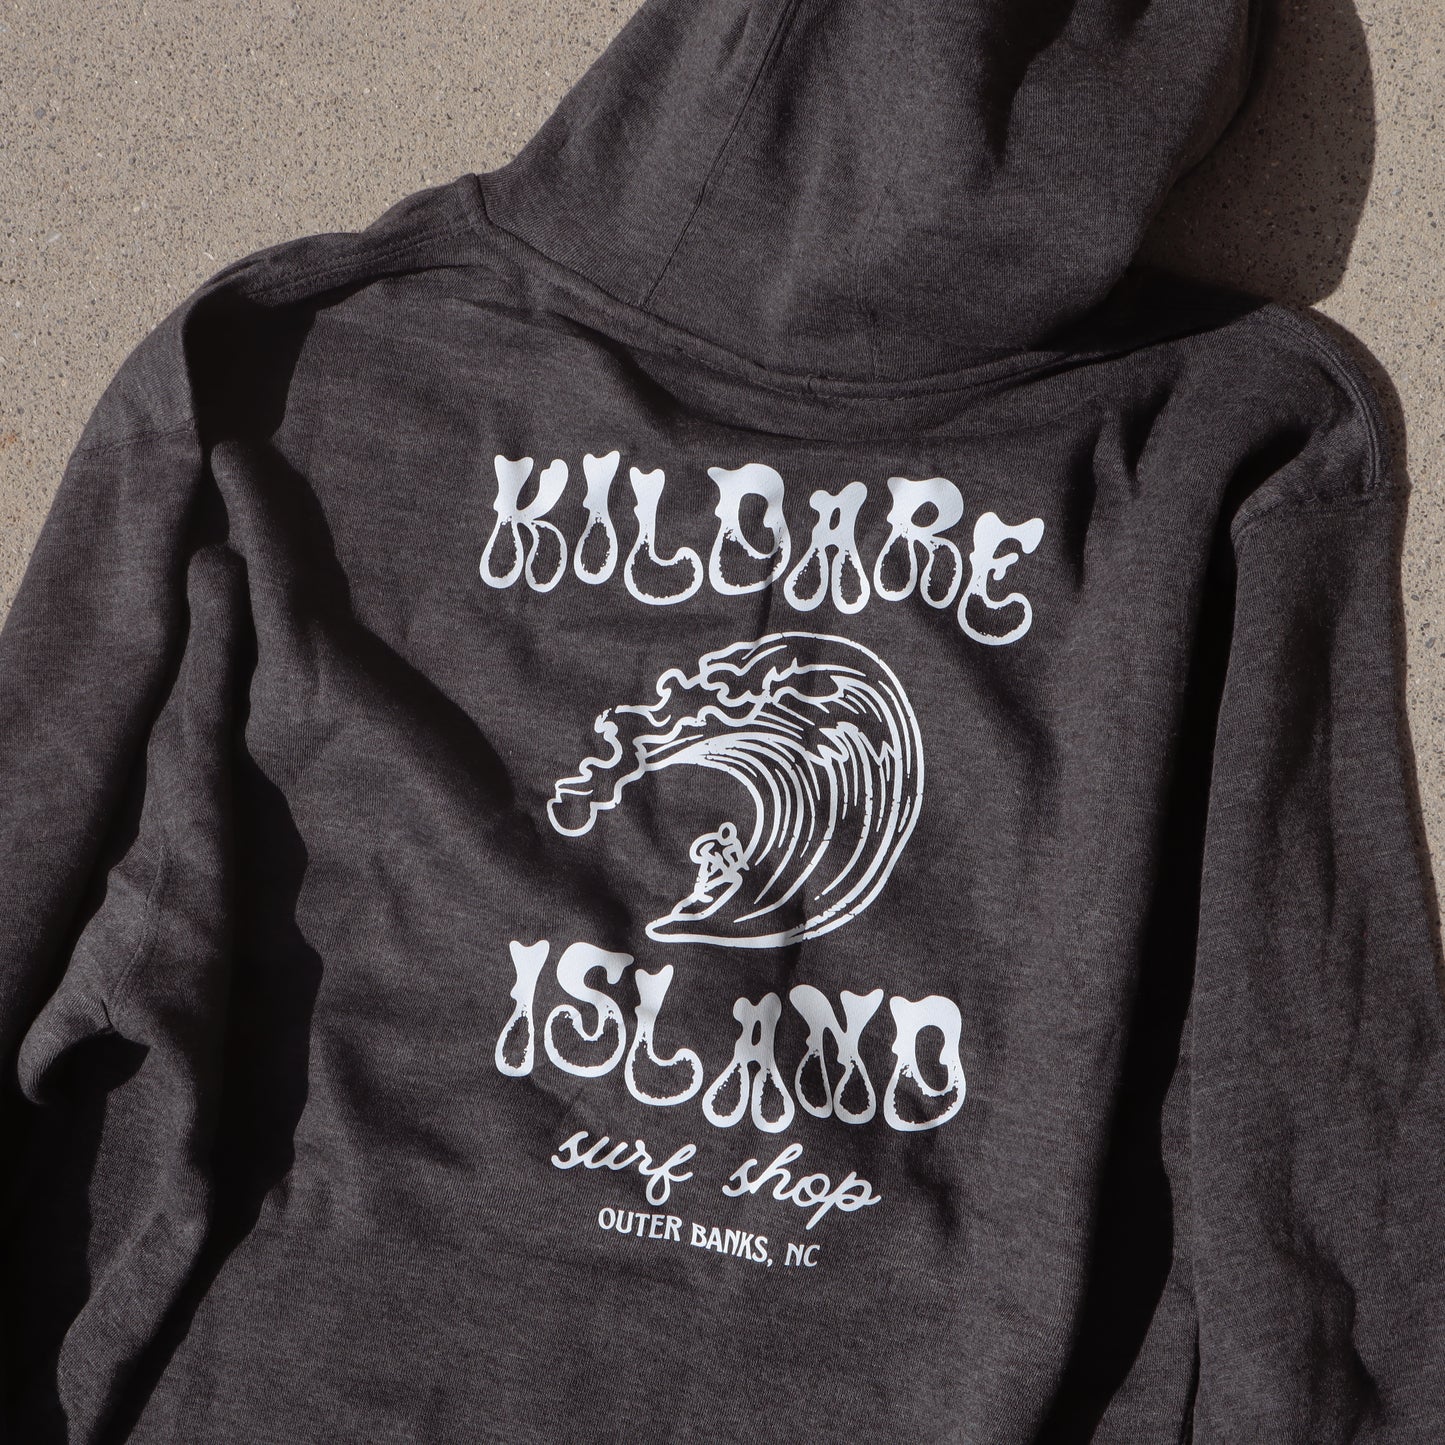 Kildare Island Surf Shop Jacket